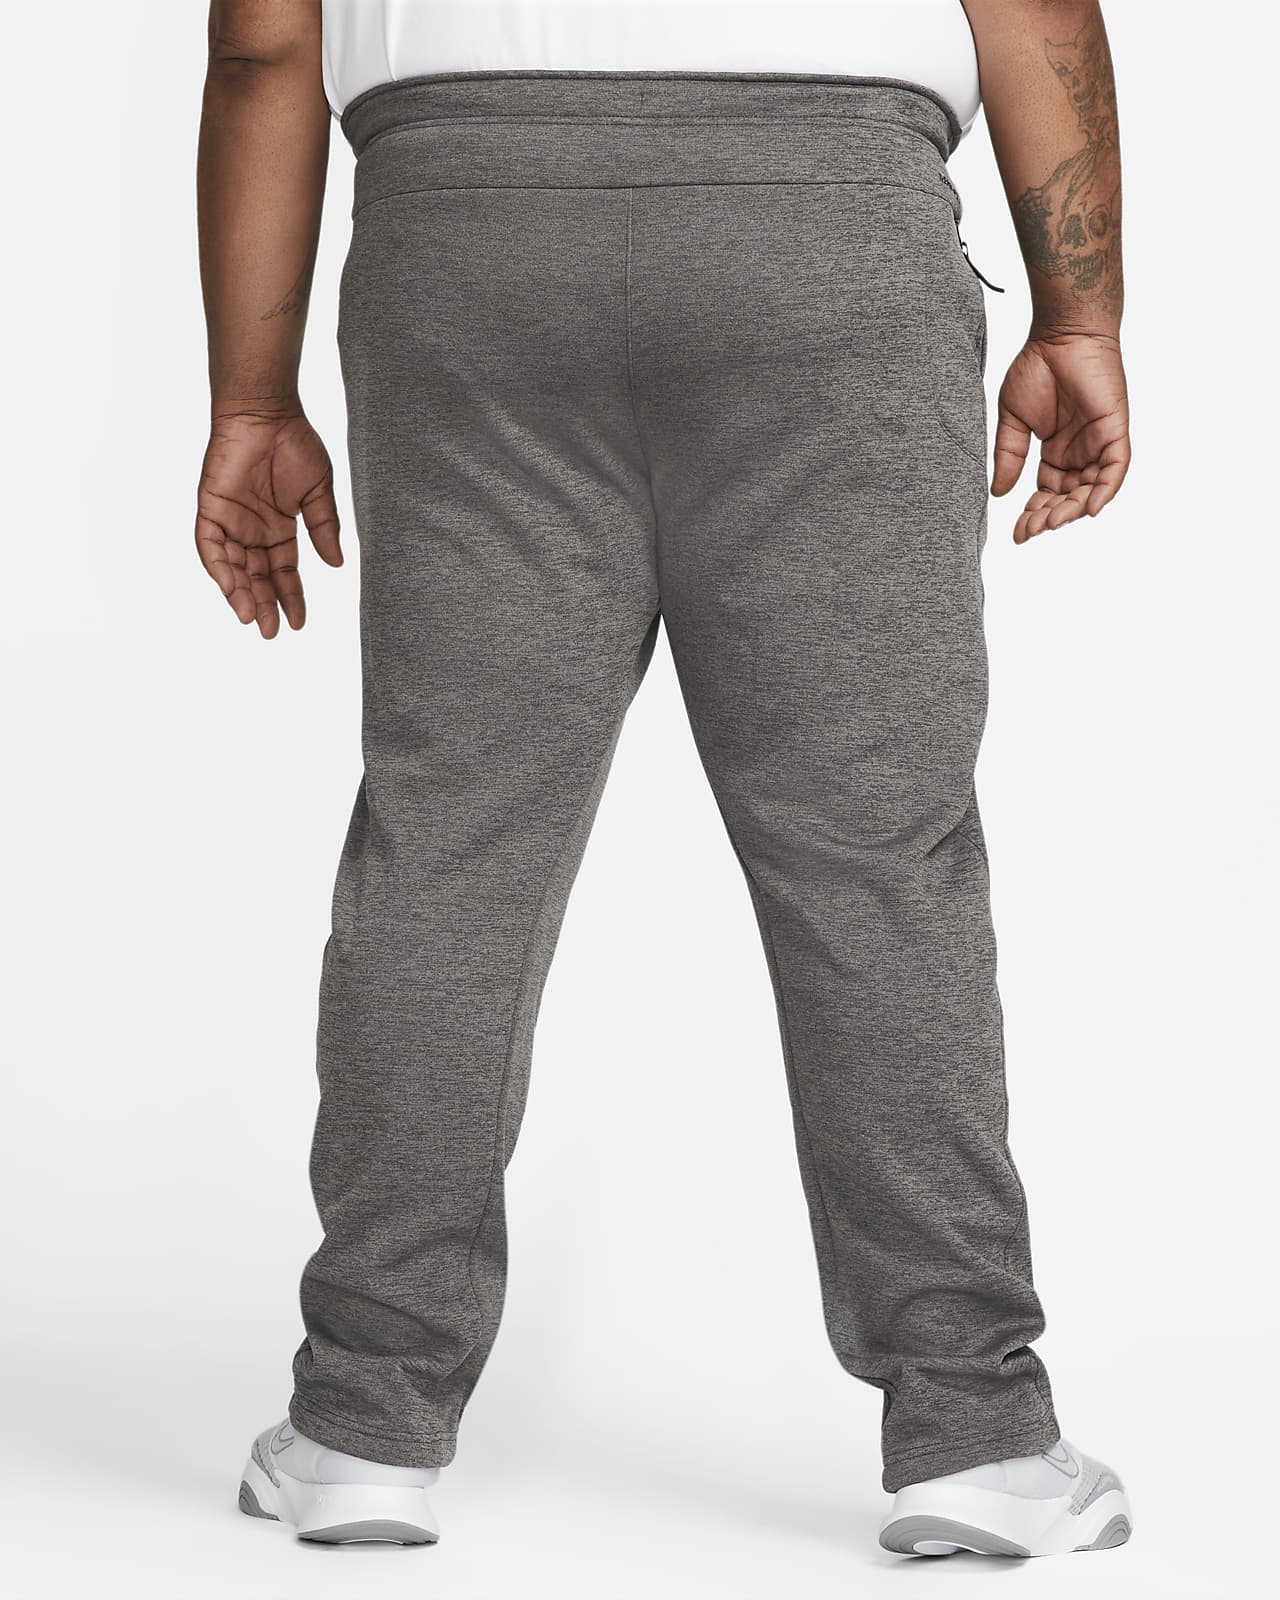 All In Motion - Pants Premium Fleece Jogger Men's. Xxl